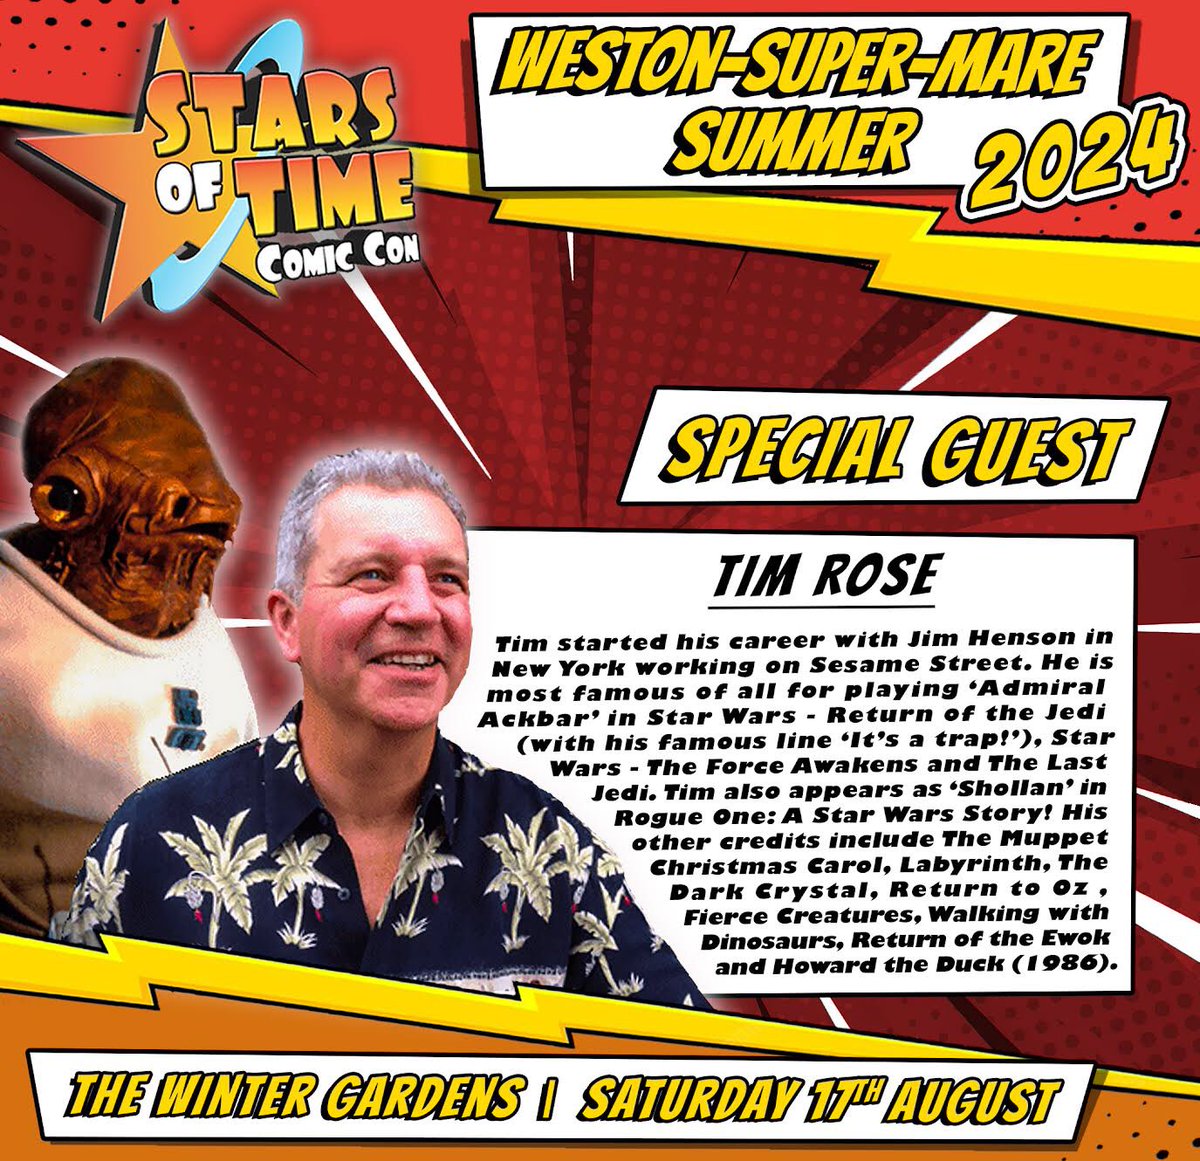 Meet TIM ROSE 💥 STARS OF TIME COMIC CON Sat 17th August THE WINTER GARDENS @WestonSeafront #ComicCon @visitweston #cosplay @VisitBristol @SuperWeston #StarWars @JediNewsNetwork @SWAUTOGRAPH @FanthaTracks #admiralackbar #jedi #muppets #puppet

Book Now at: eventbrite.co.uk/e/stars-of-tim…